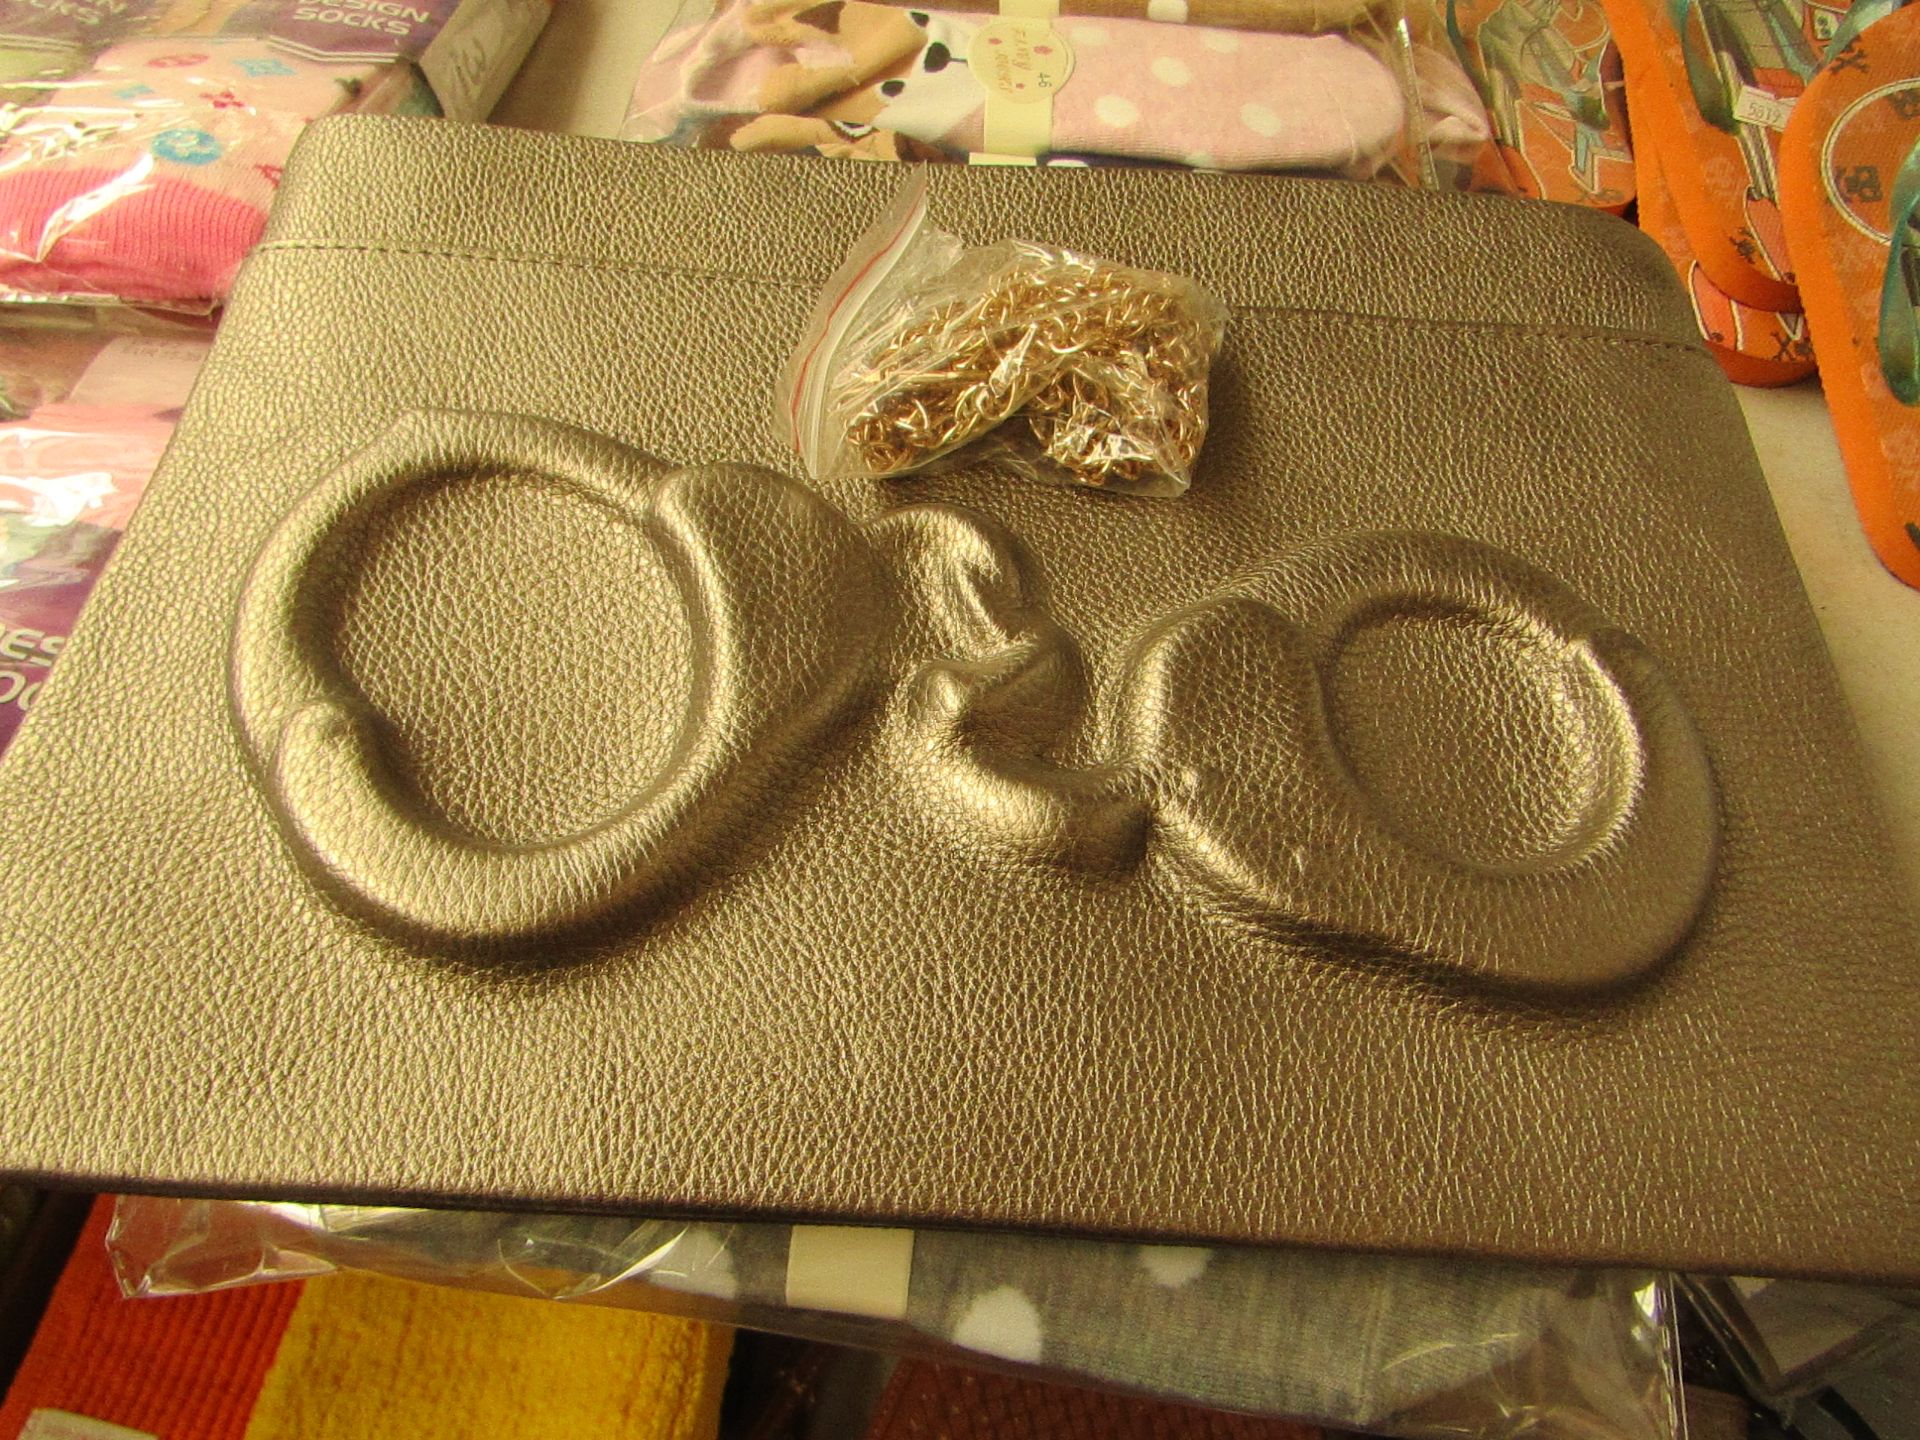 Ladies Large Handbag new & packaged (see image for design)